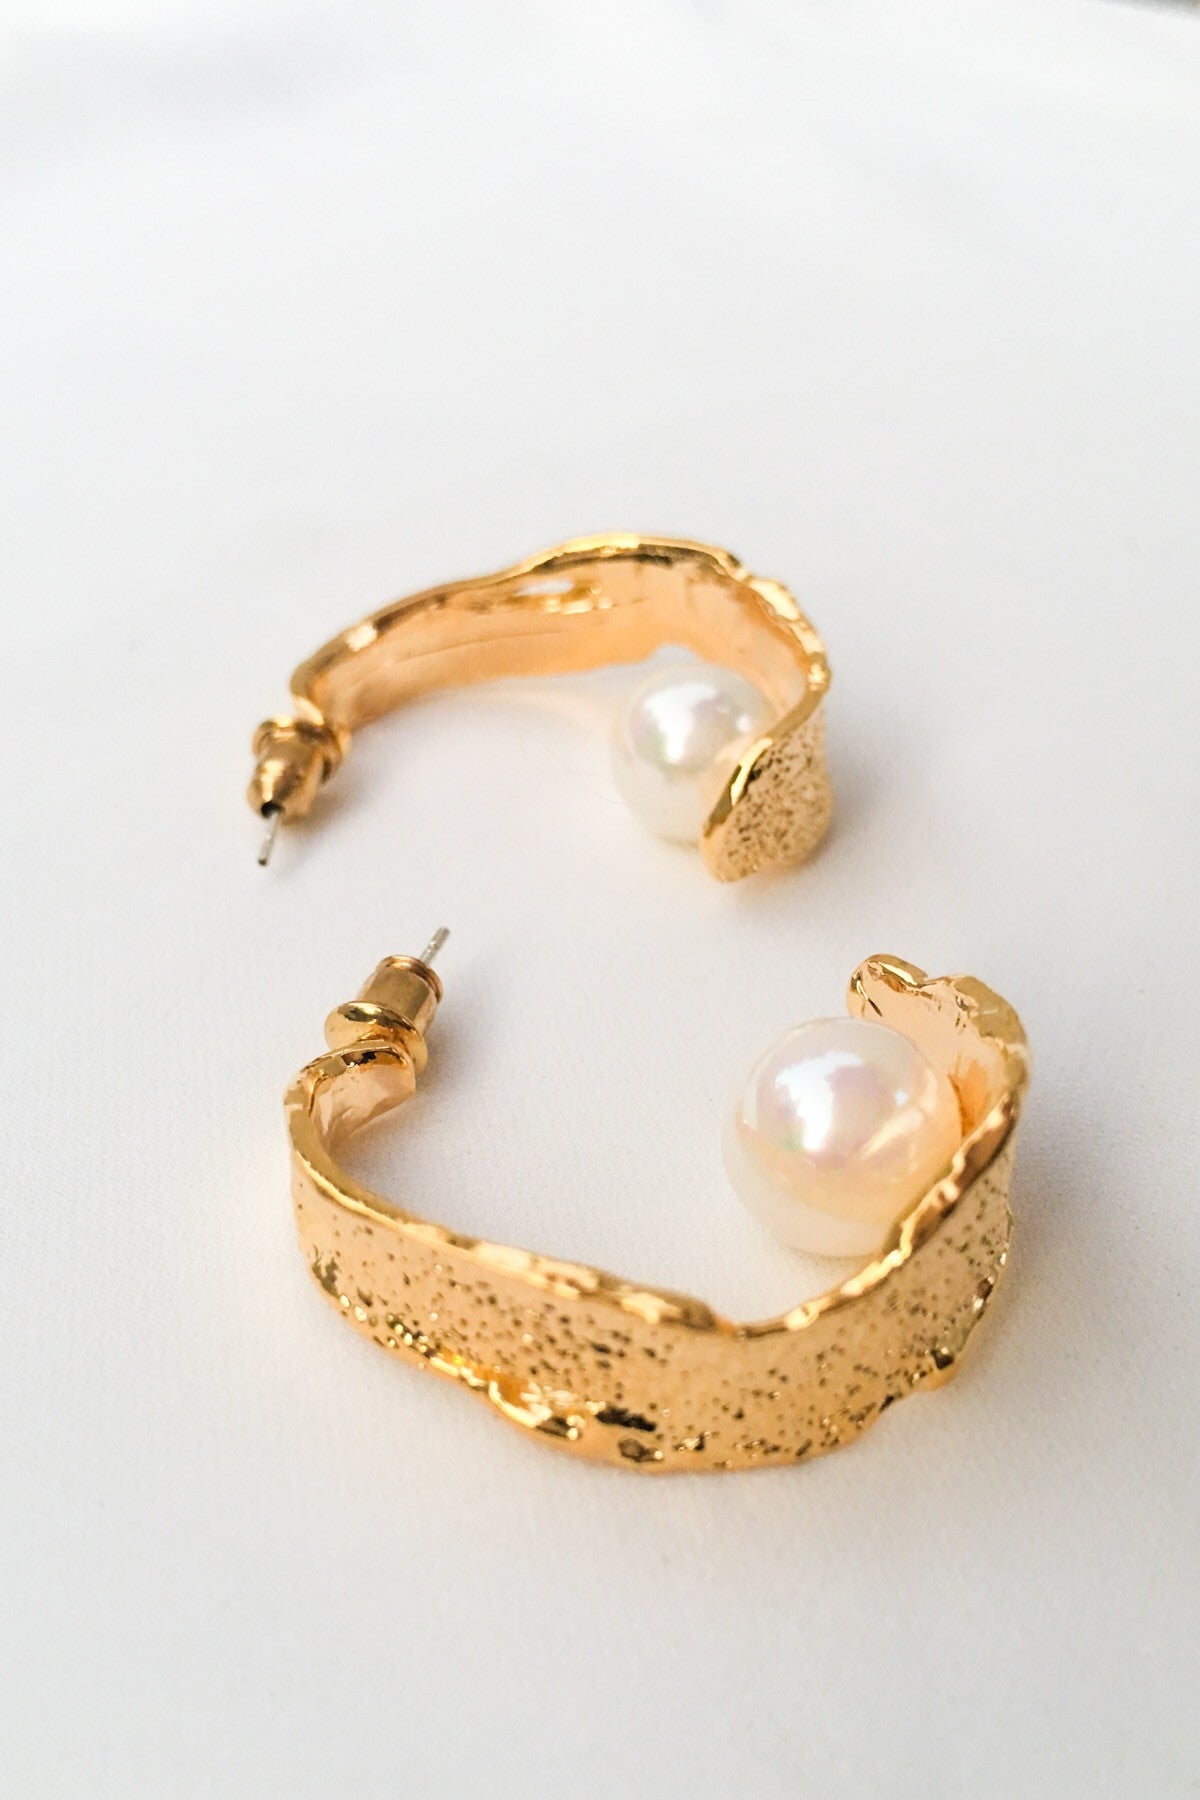 SKYE San Francisco SF California shop ethical sustainable modern minimalist quality women jewelry Margo 18K Gold Pearl Hoop Earrings 4